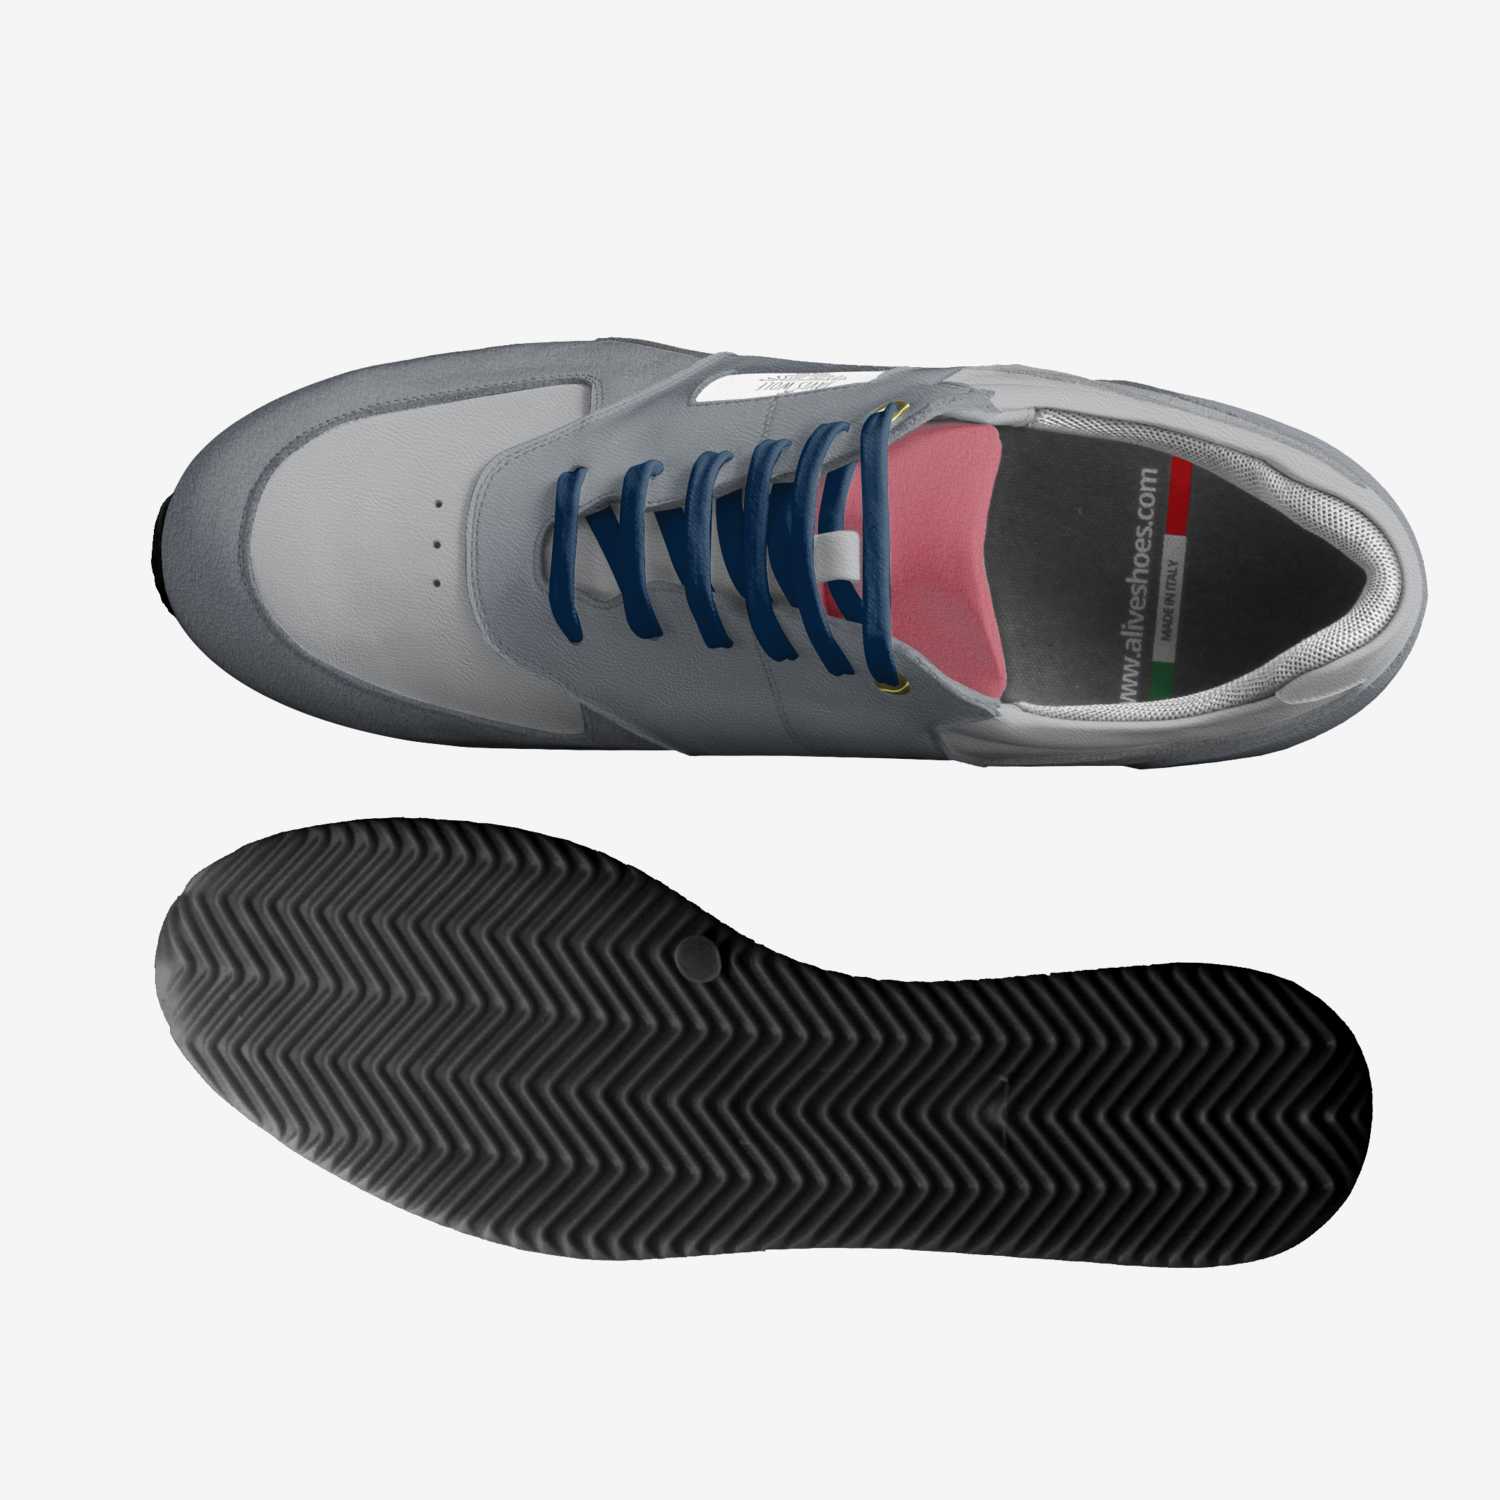 JAVIS WOLF | A Custom Shoe concept by William Alvarez